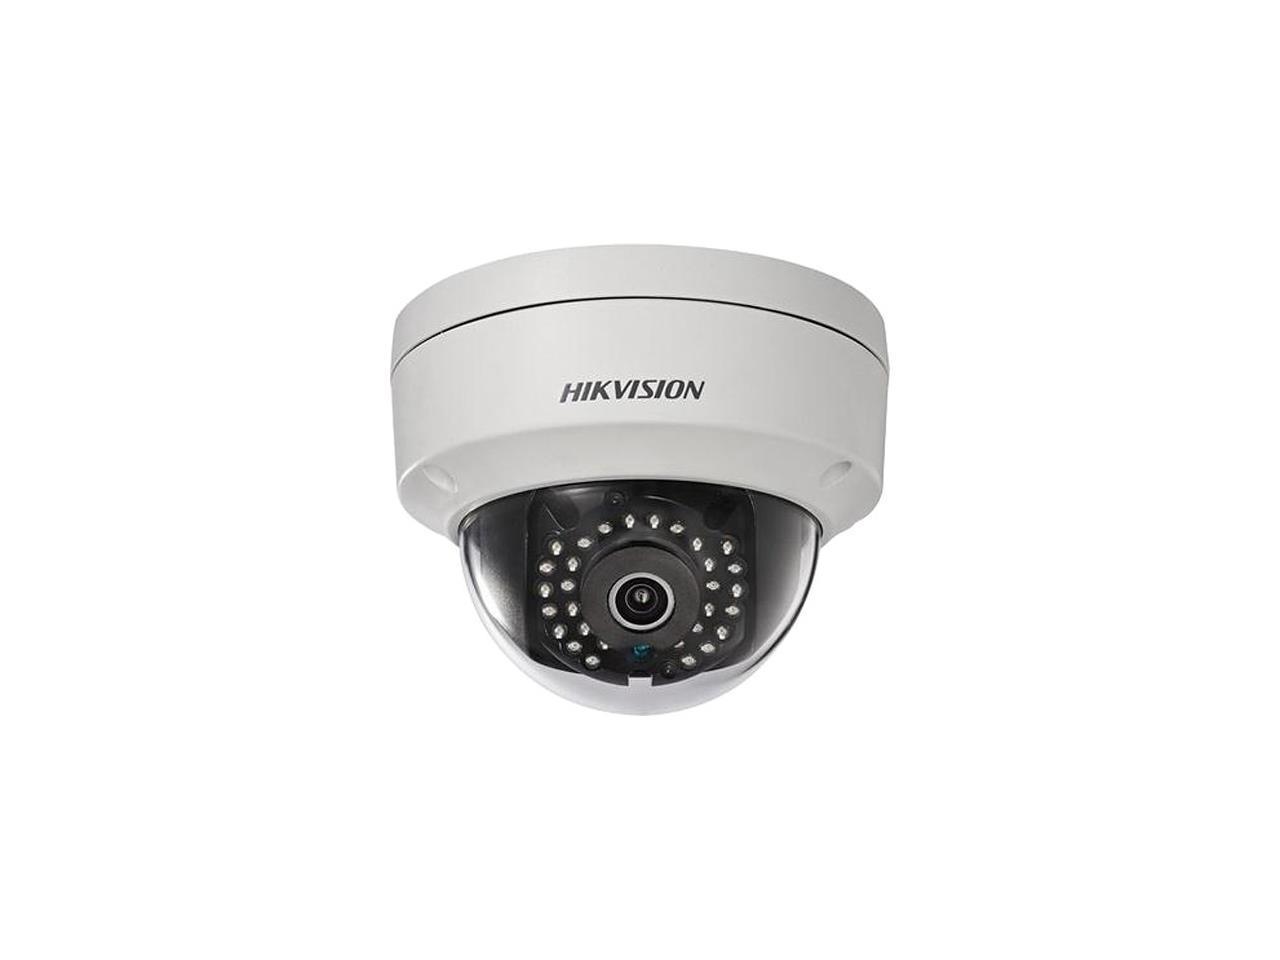 Hik Vision DS-2CD2142FWD-I 4 MP network external dome camera CCTV fixed lens IR 